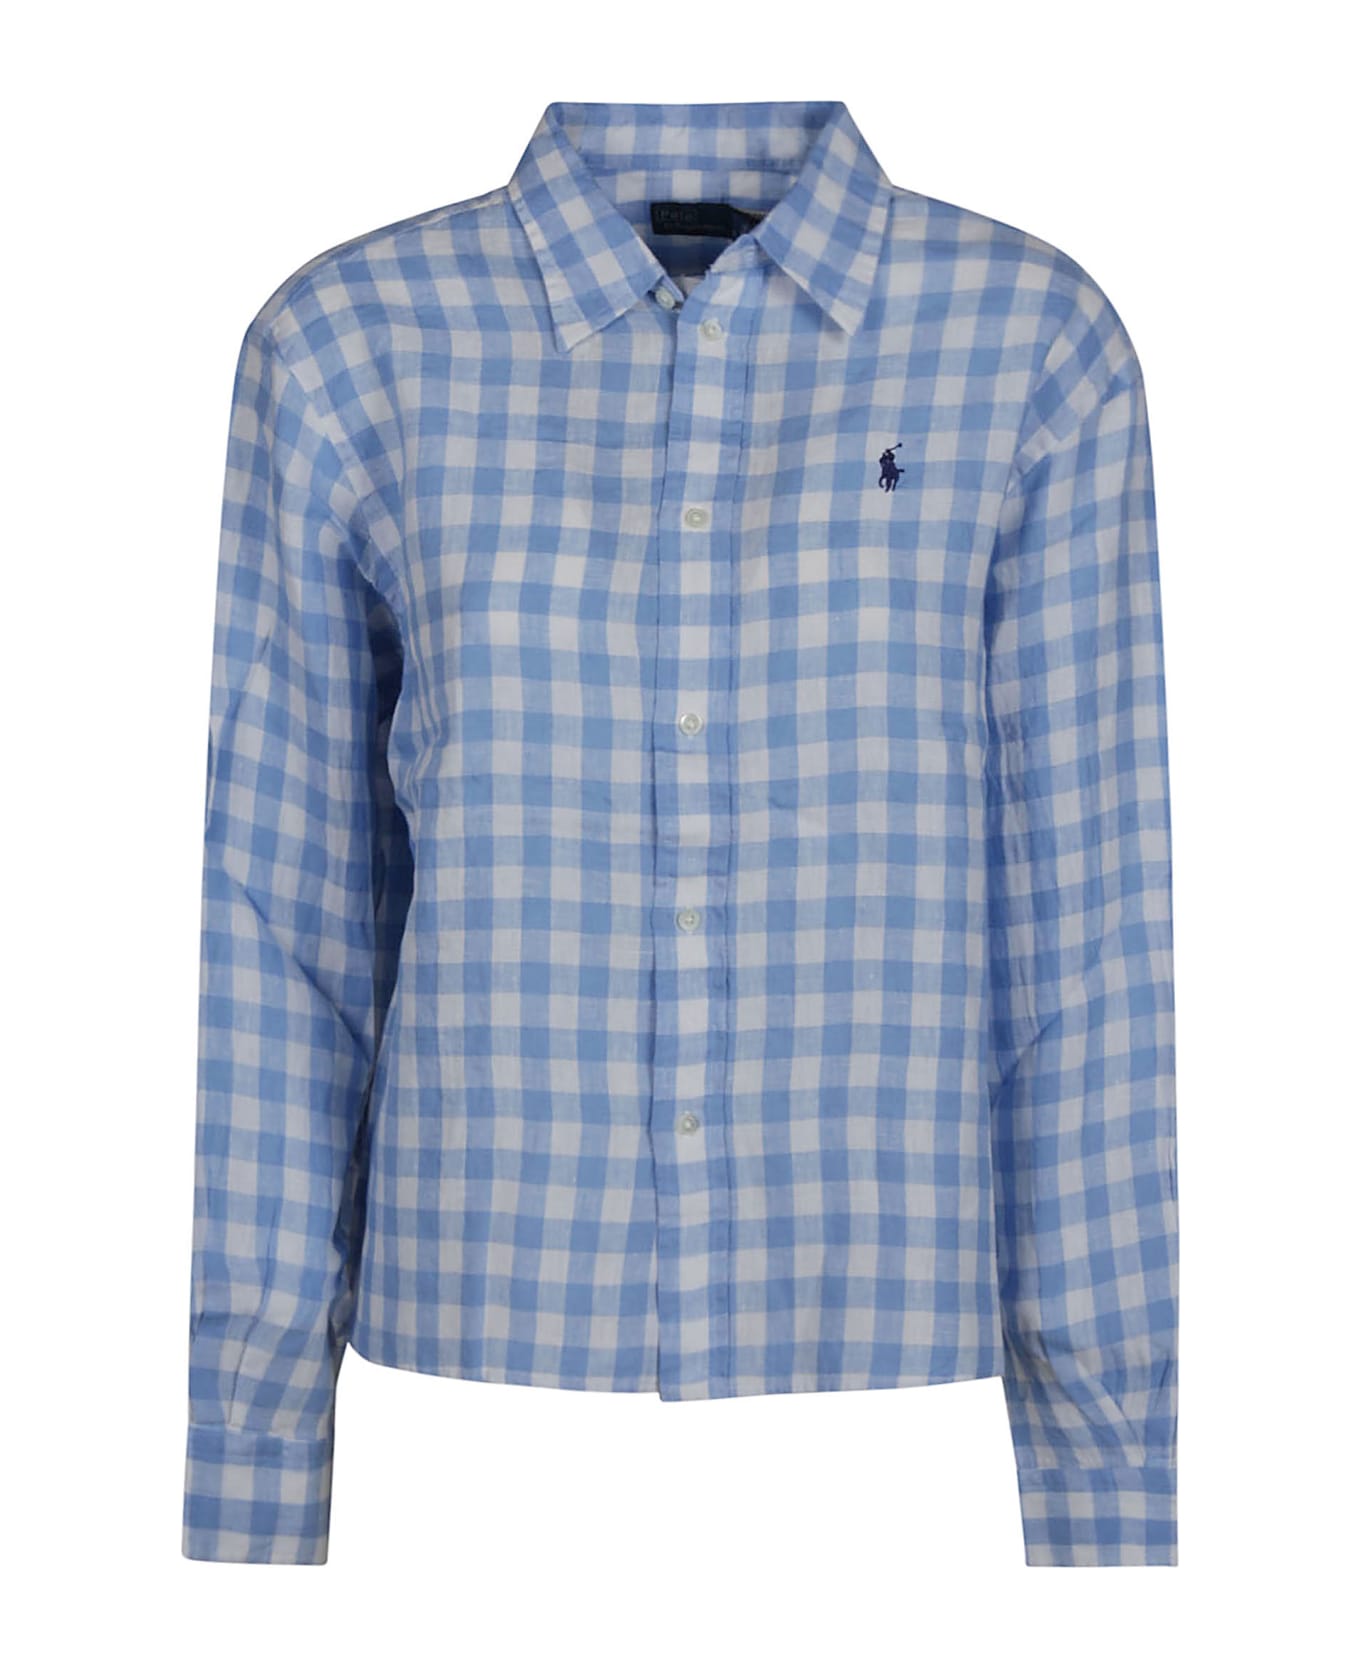 Polo Ralph Lauren Long Sleeve Button Front Shirt - Austin Blue/white